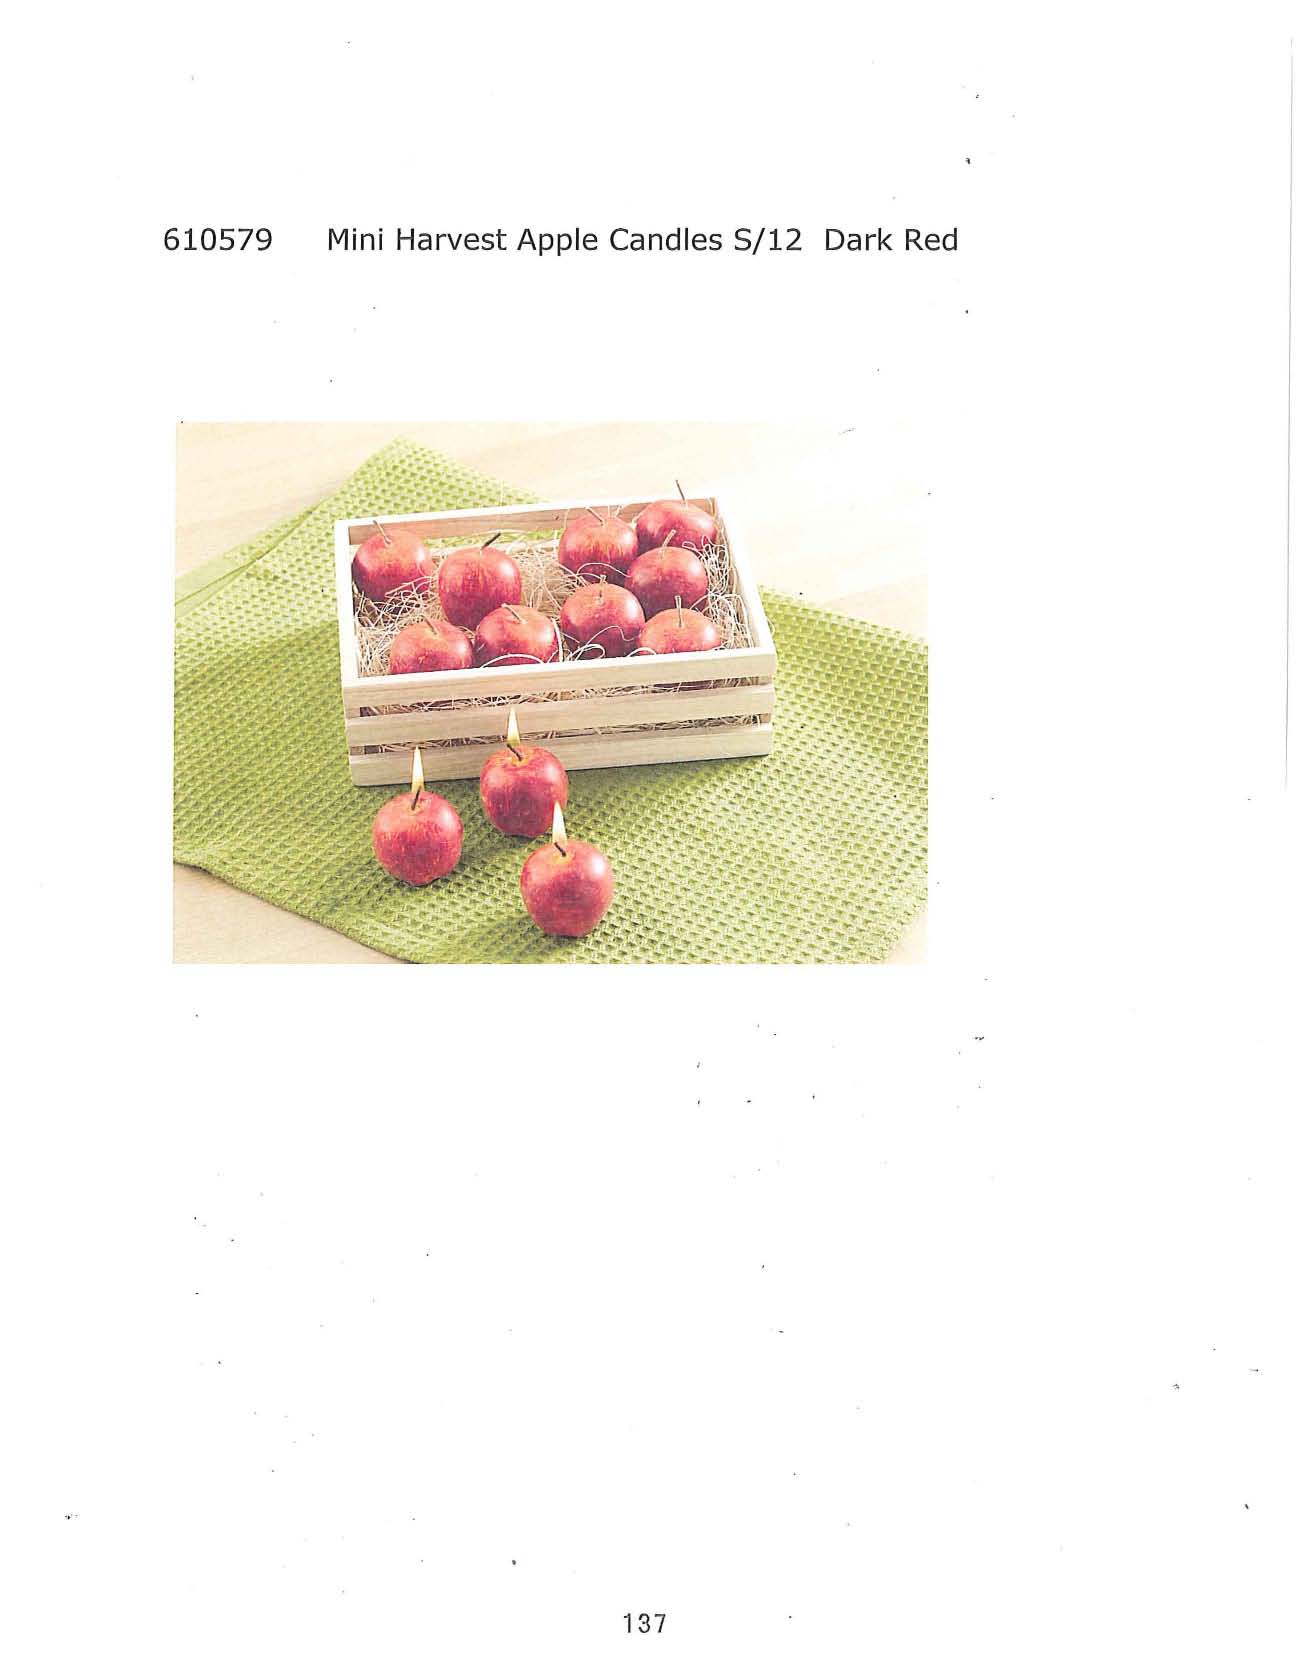 Mini harvest Apple Candle s/12 - Dark Red